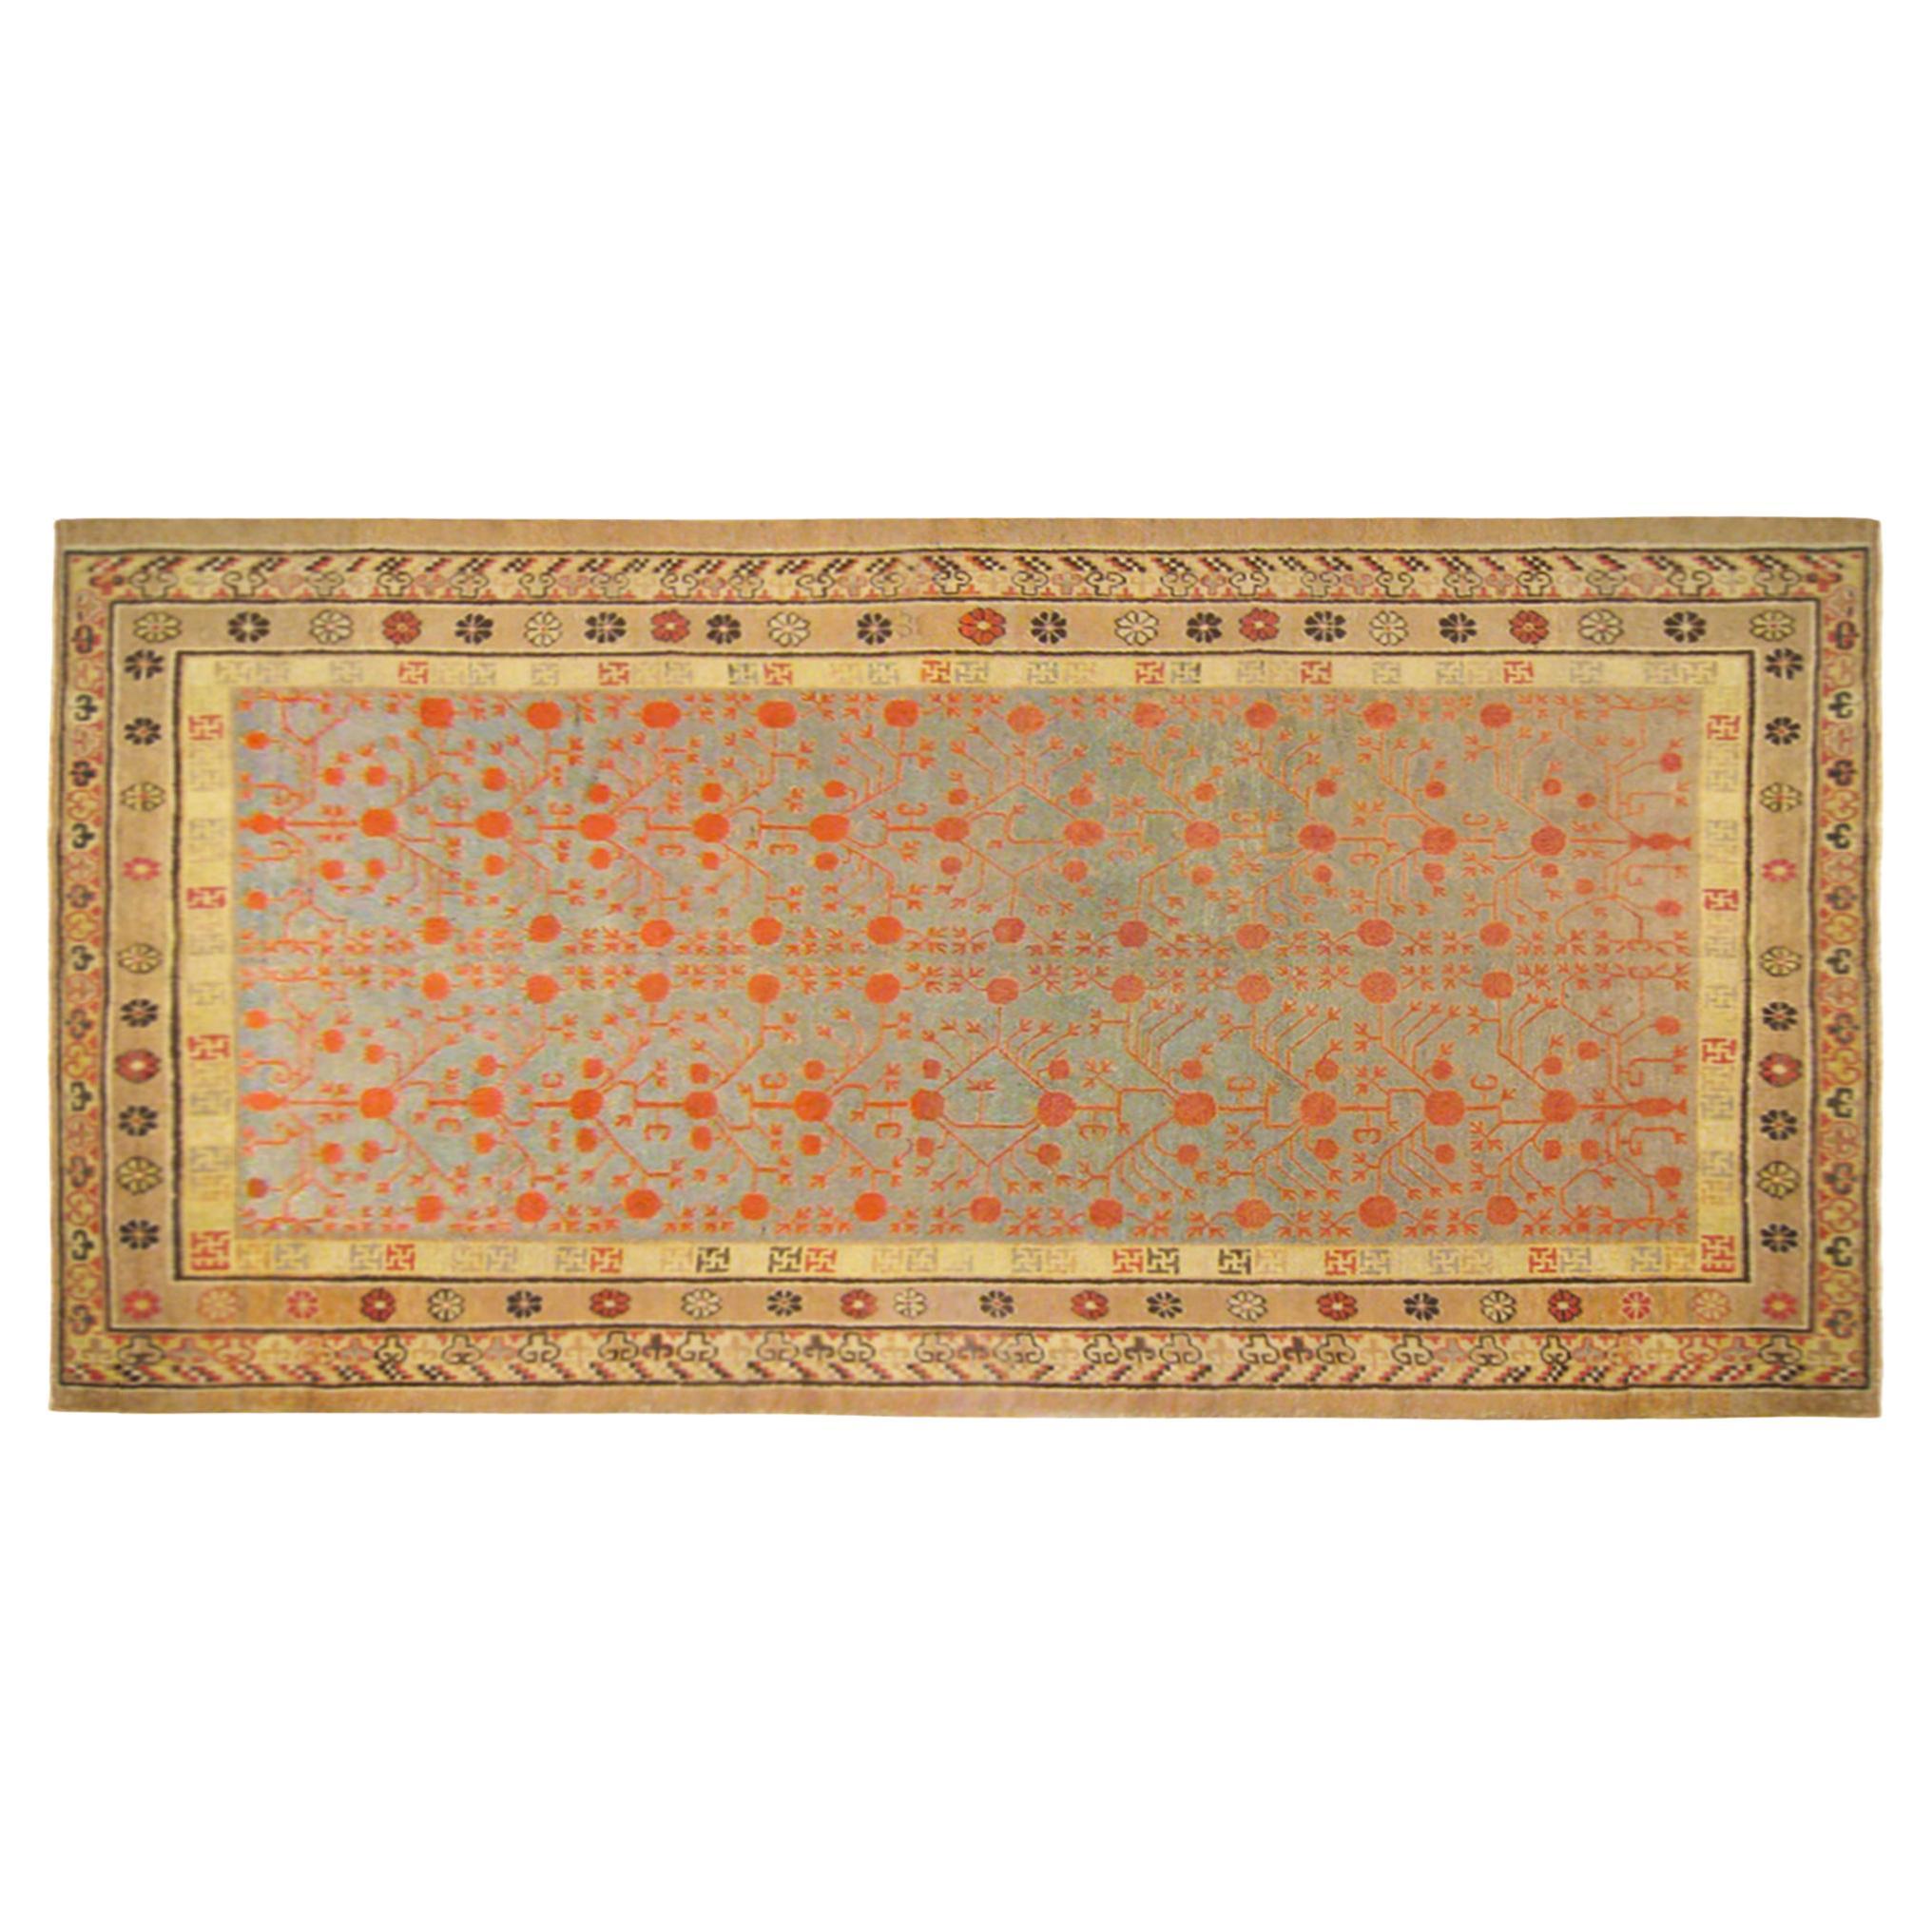 Antique Khotan Decorative Oriental Carpet in Gallery Size, circa 1890, Soft Blue